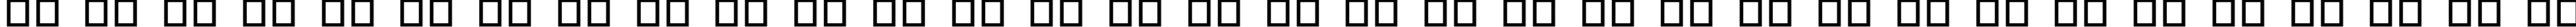 Пример написания русского алфавита шрифтом Aunchanted Expanded Bold